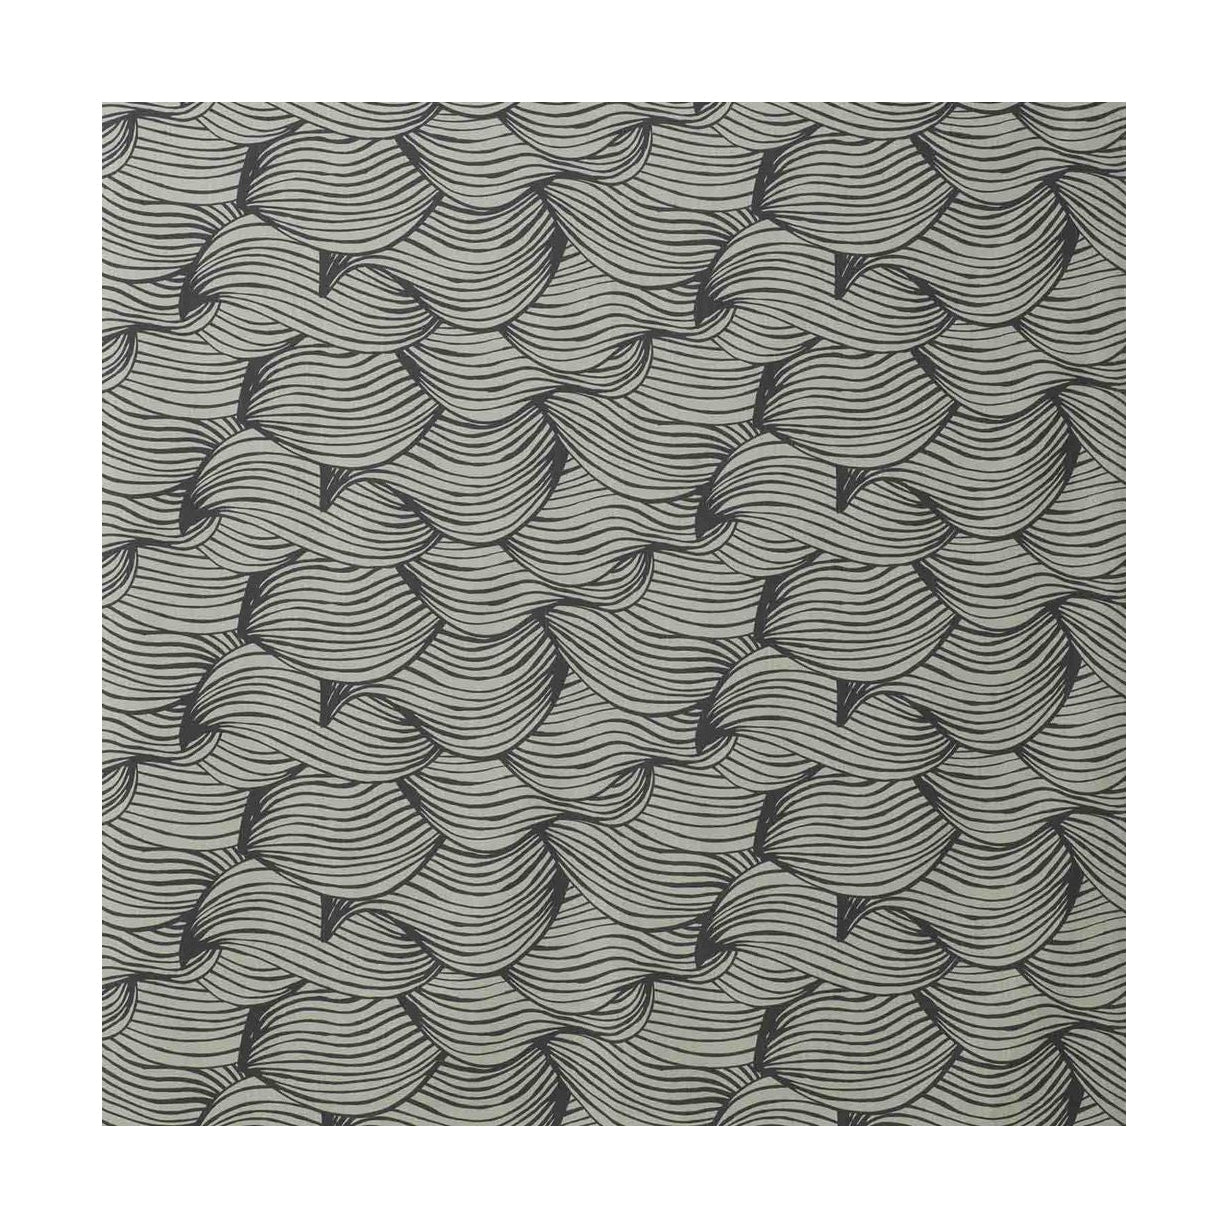 Spira bølge CTC stoff med akrylbredde 145 cm (pris per meter), grå